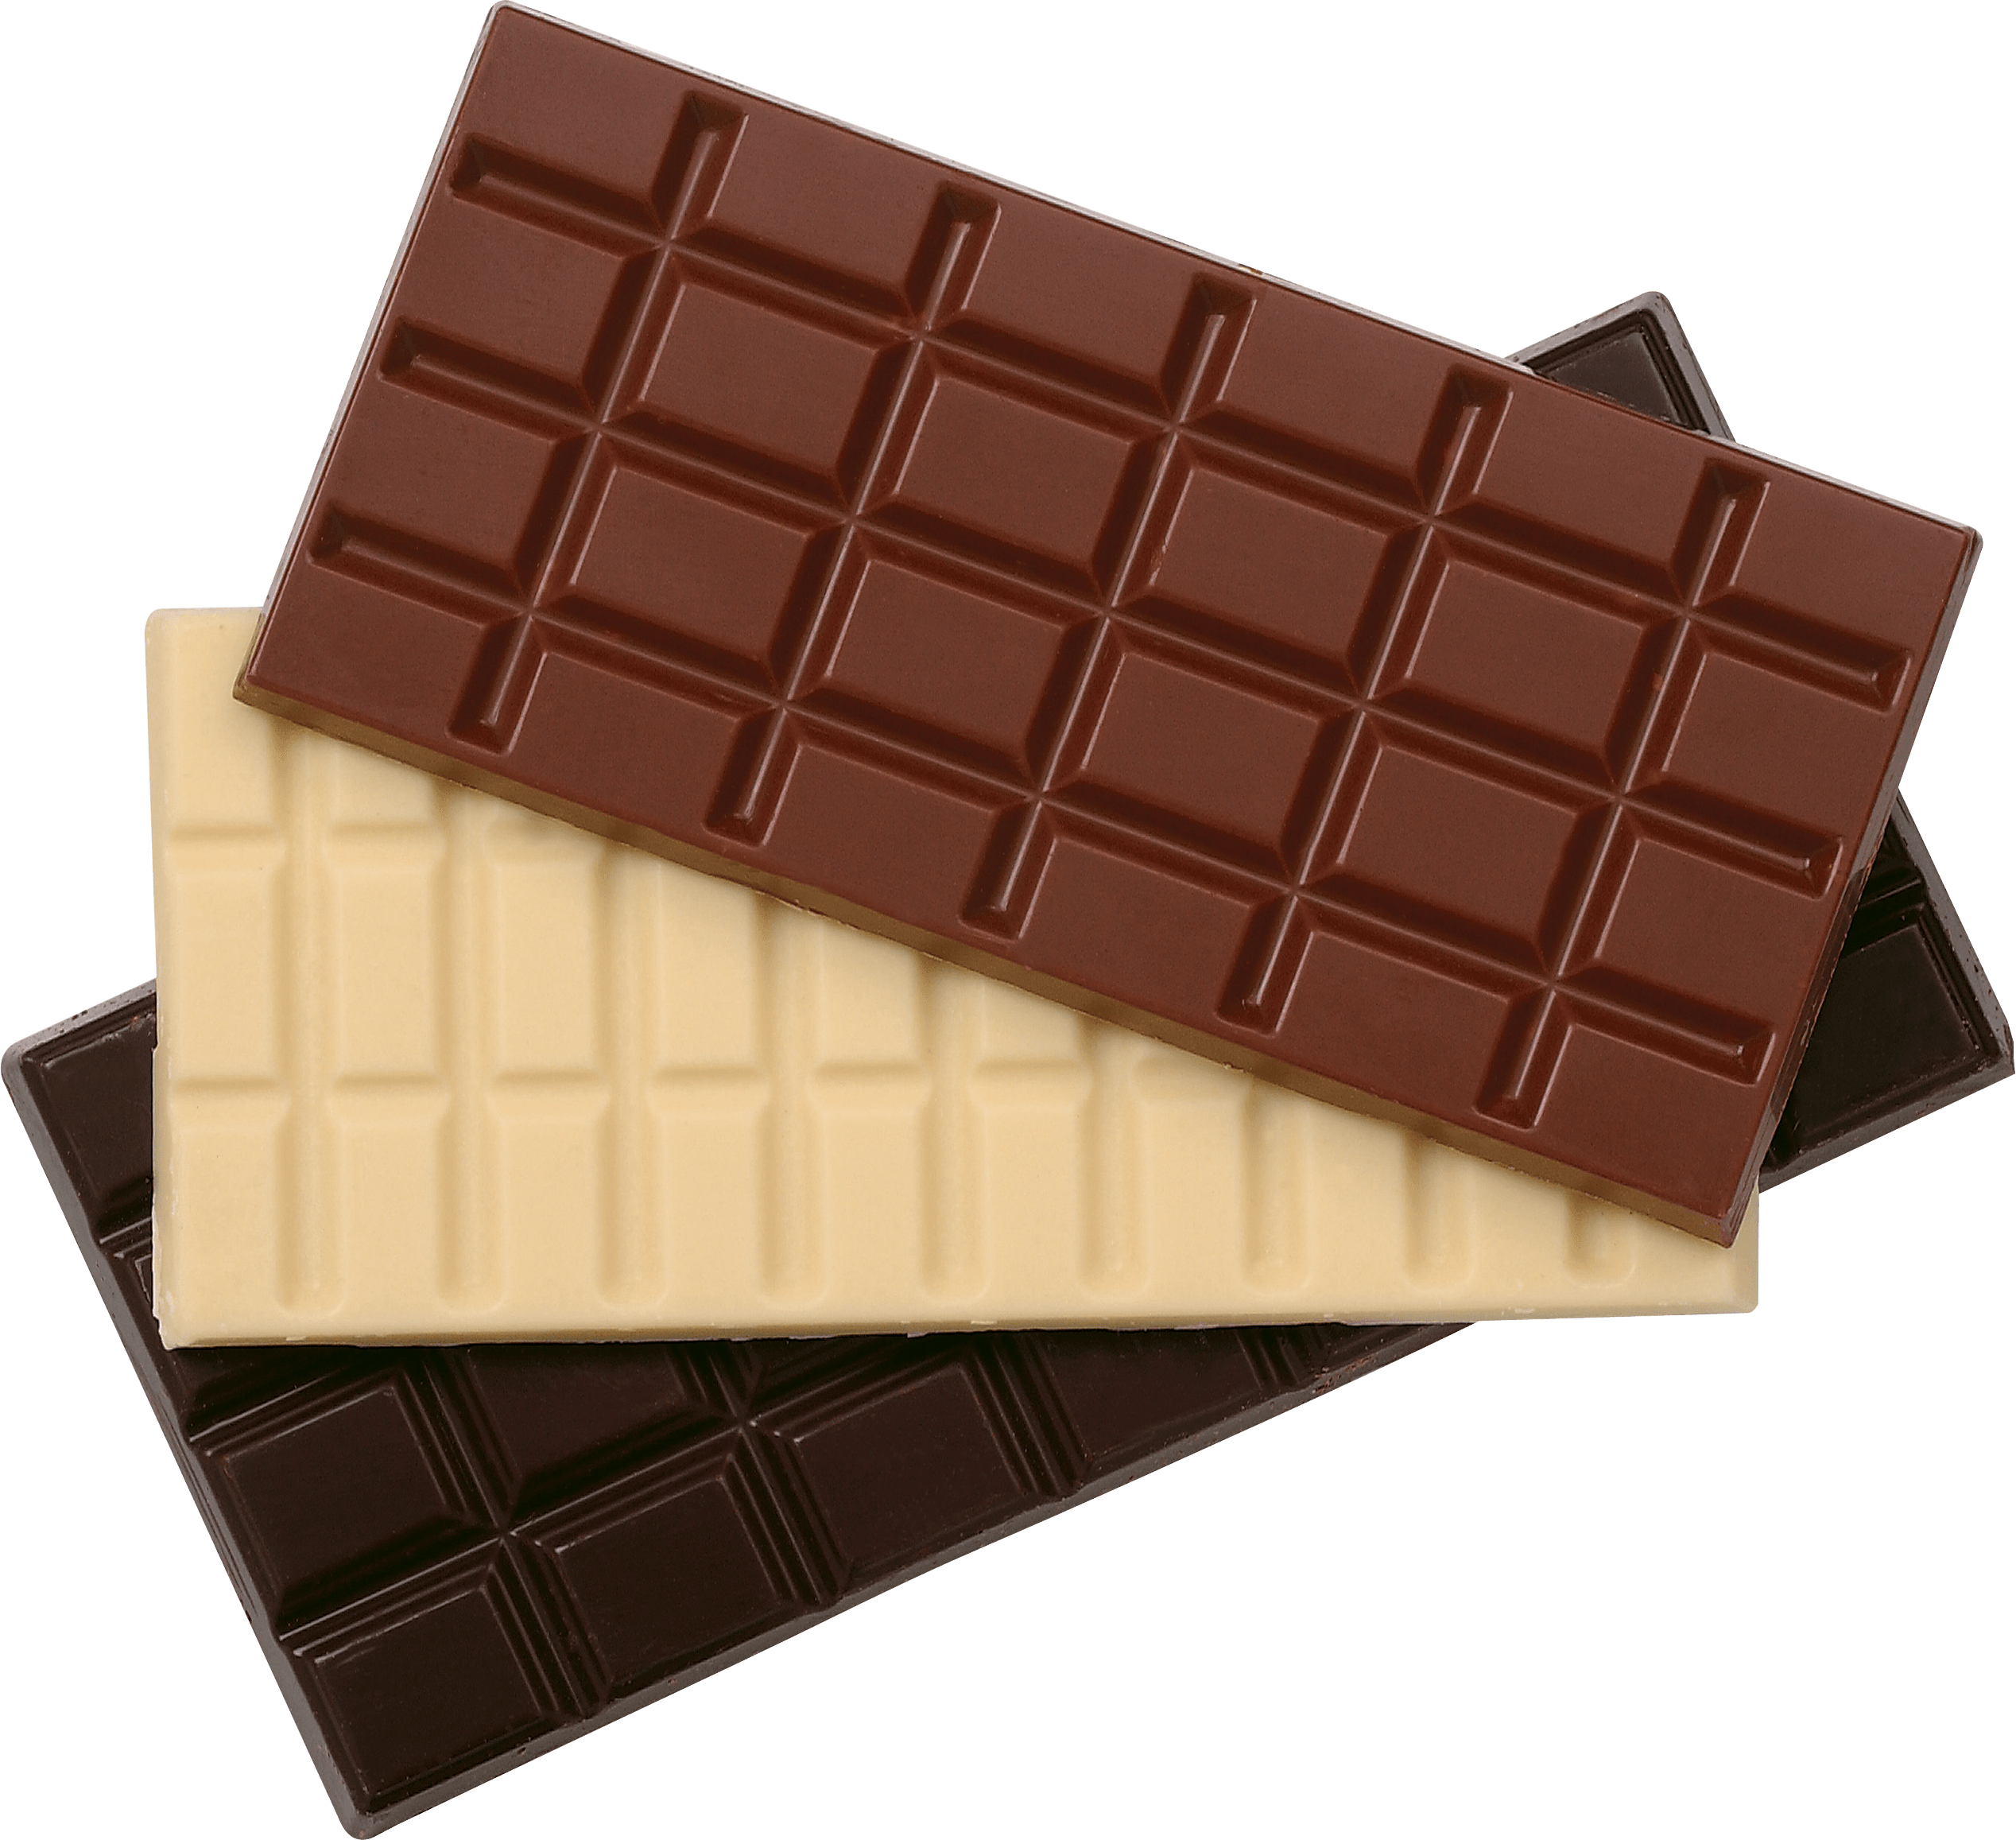 Chocolate Bars Png Image PNG Image